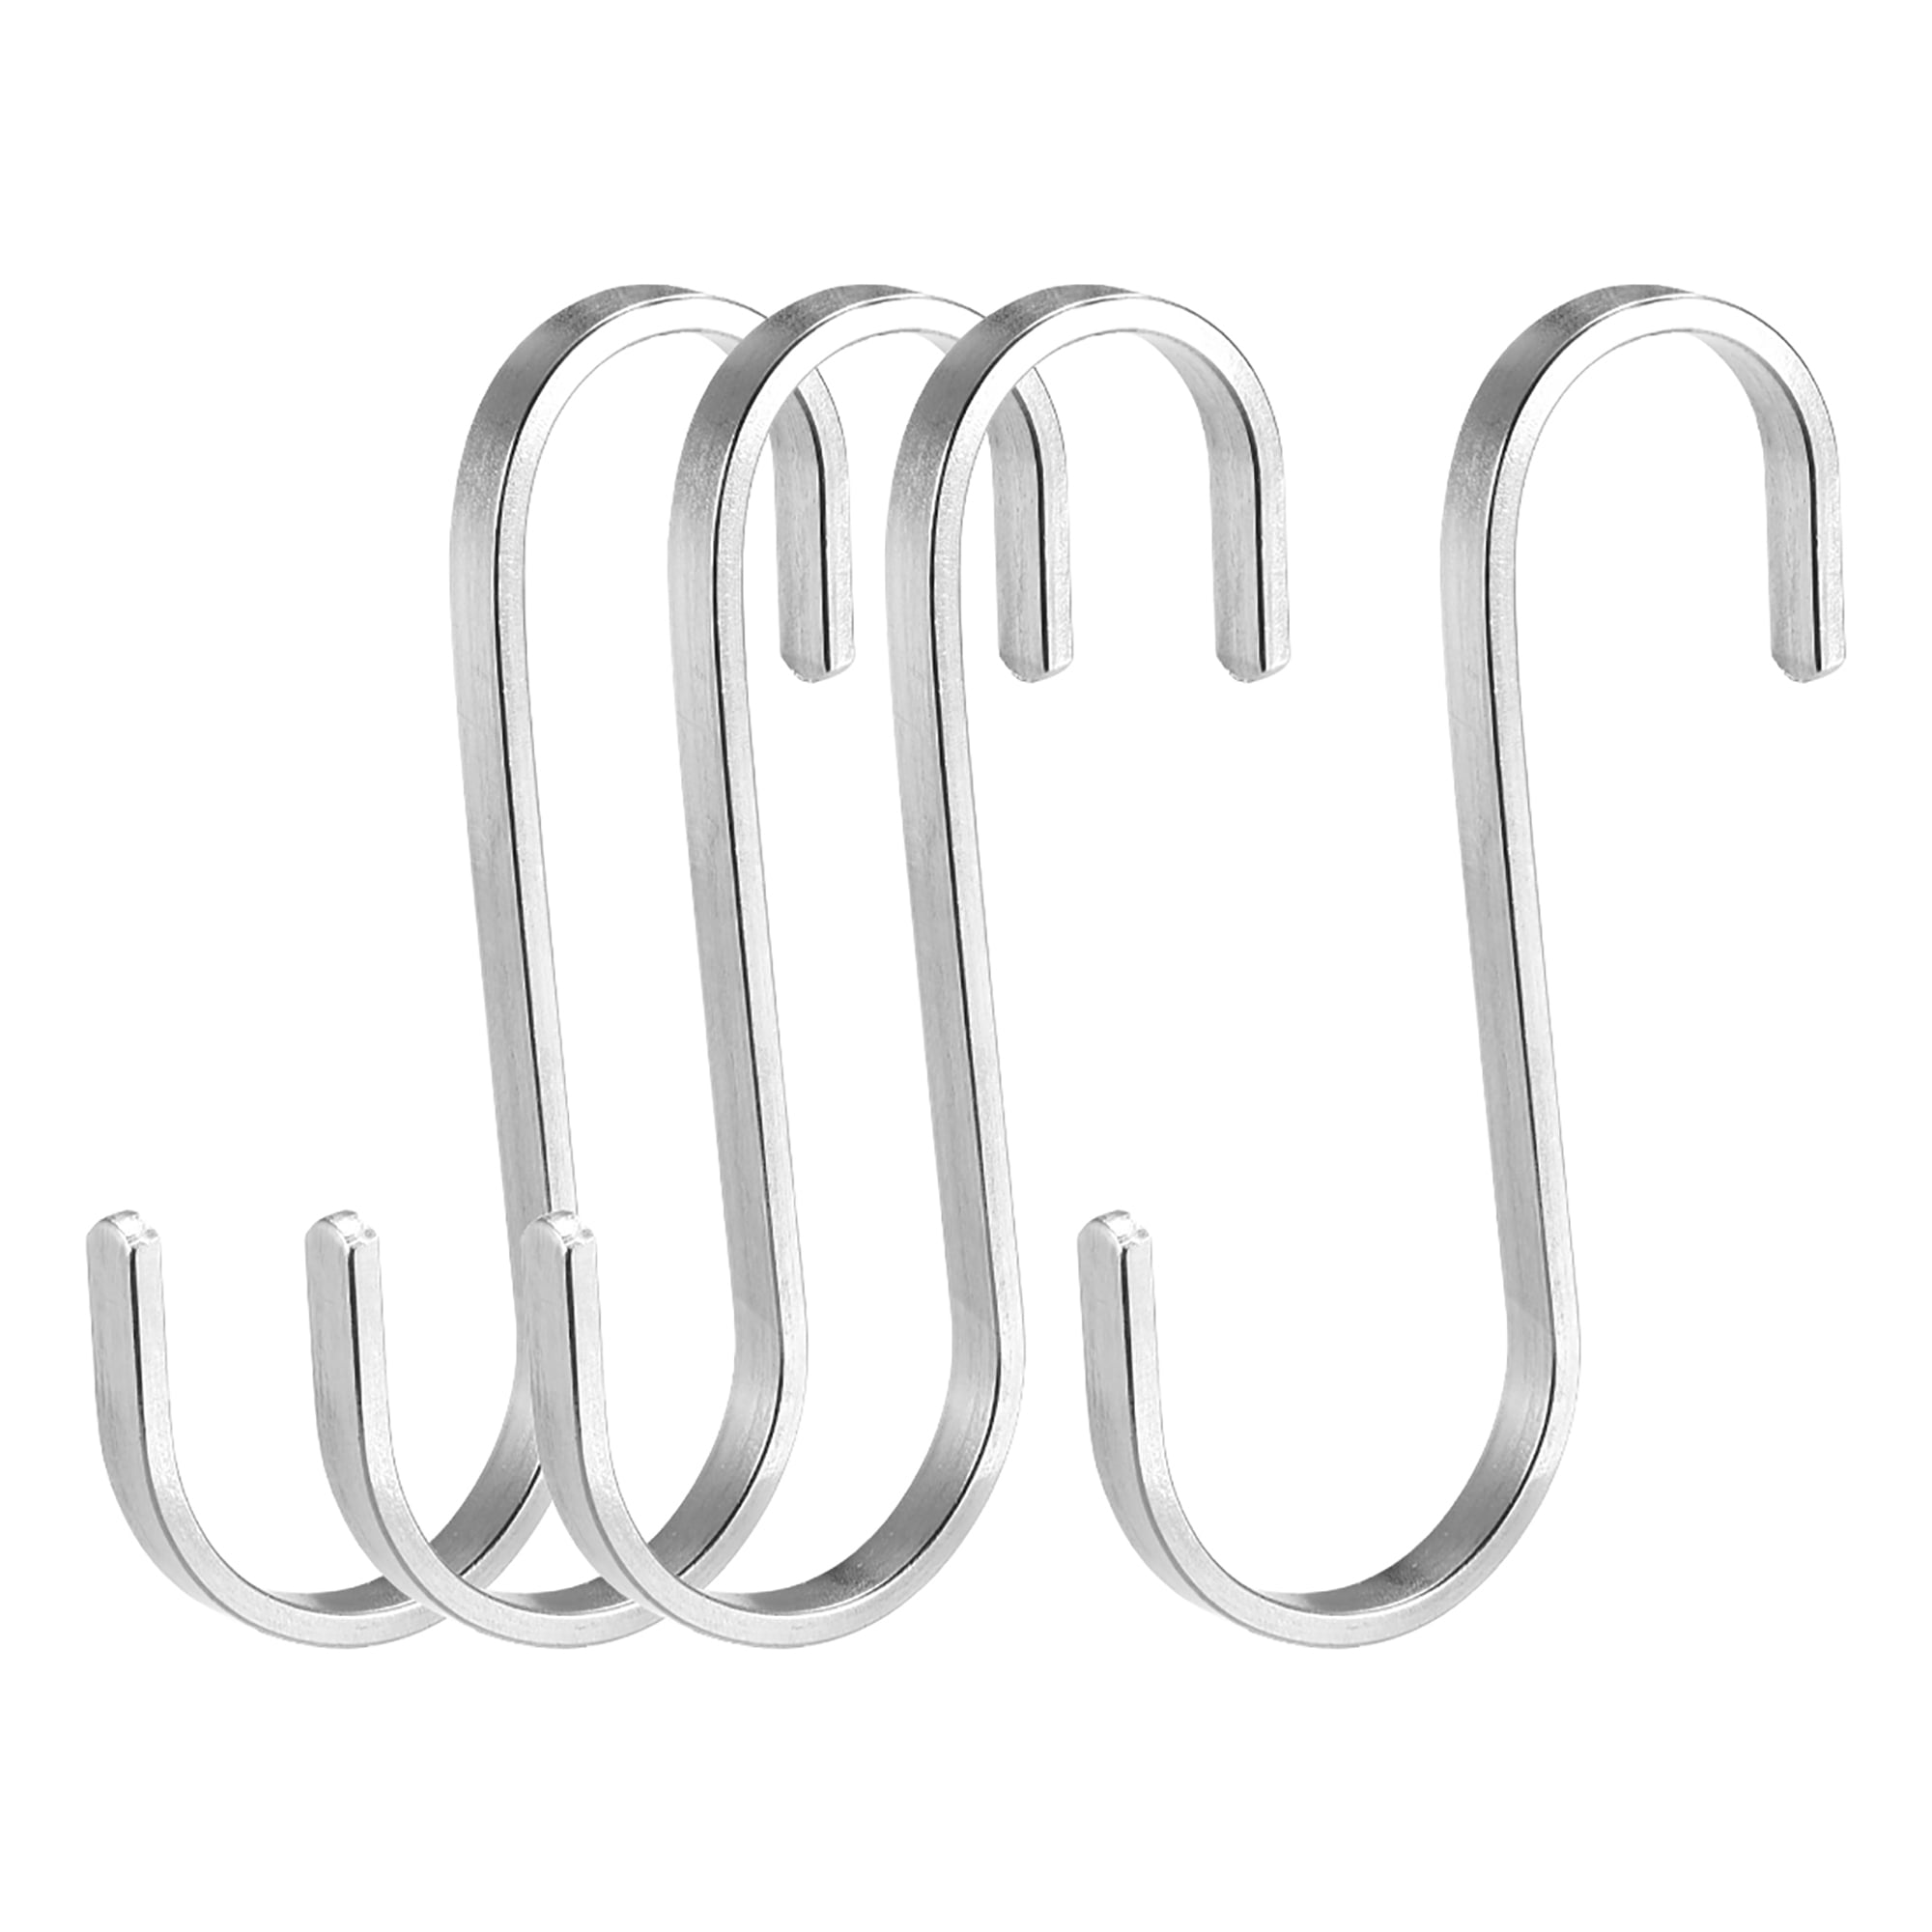 Stainless Steel S Hooks 3.15" Flat S Shaped Hangers Multiple Uses 4pcs 